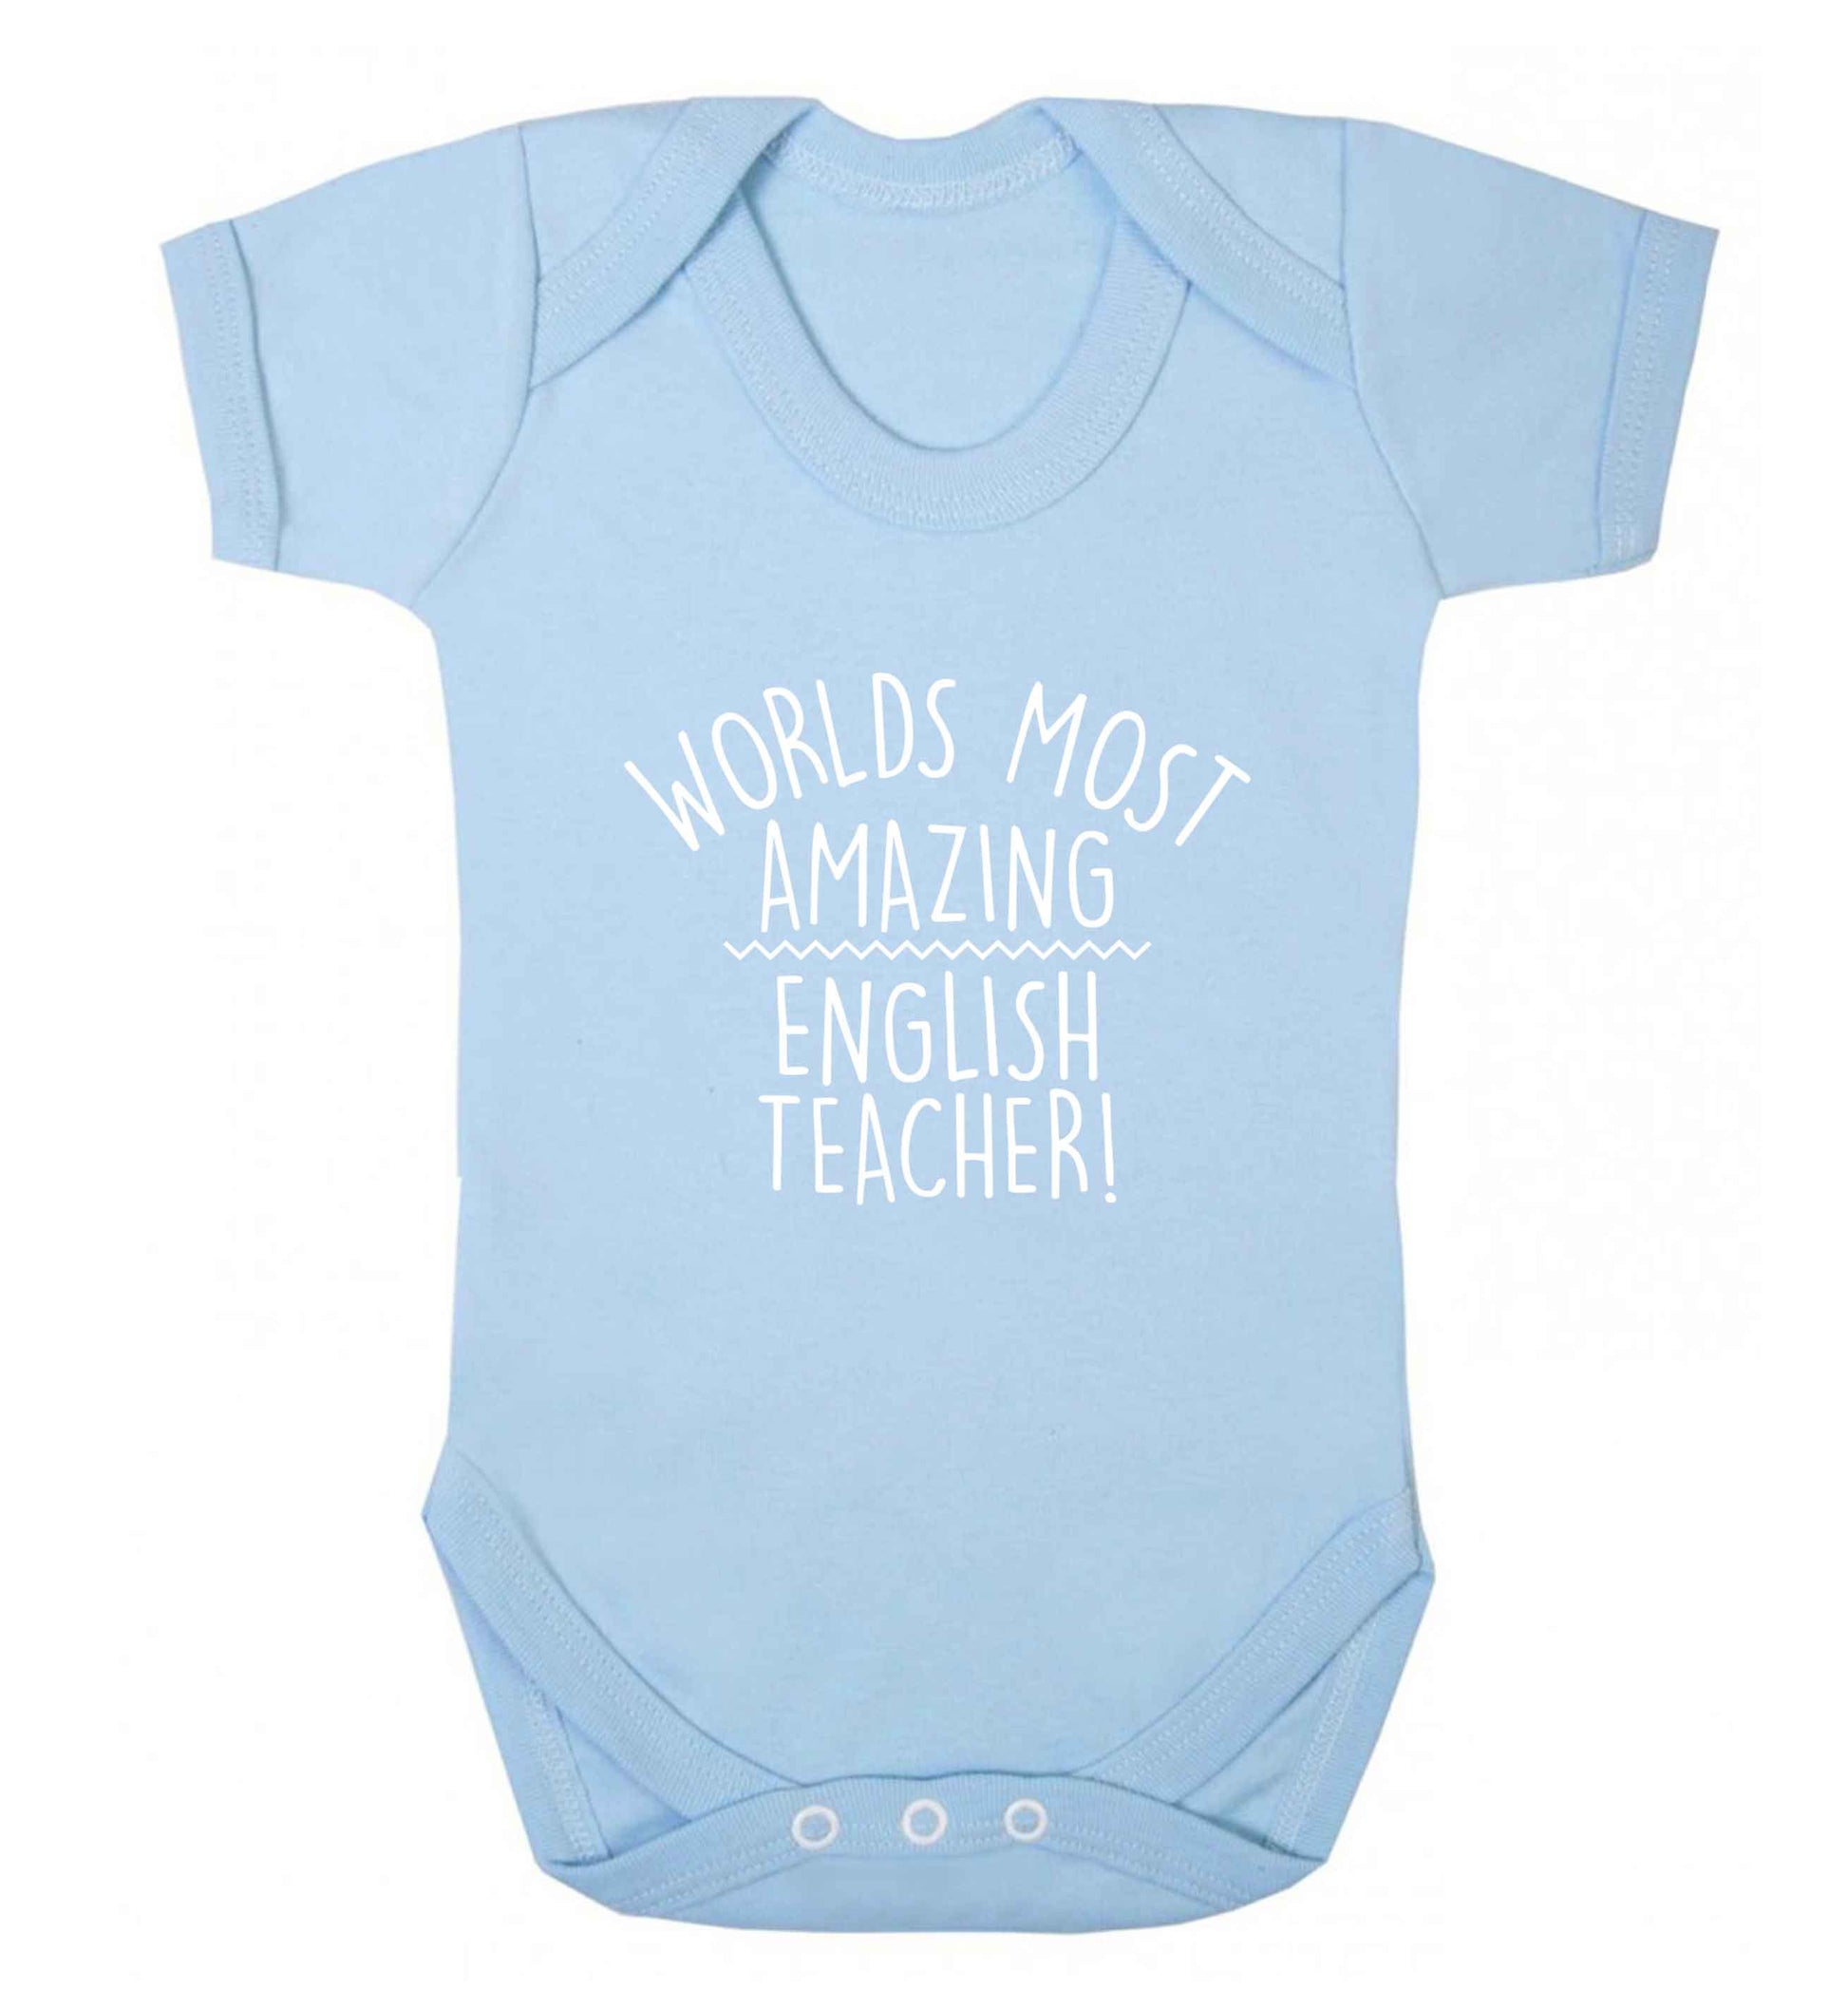 Worlds most amazing English teacher baby vest pale blue 18-24 months